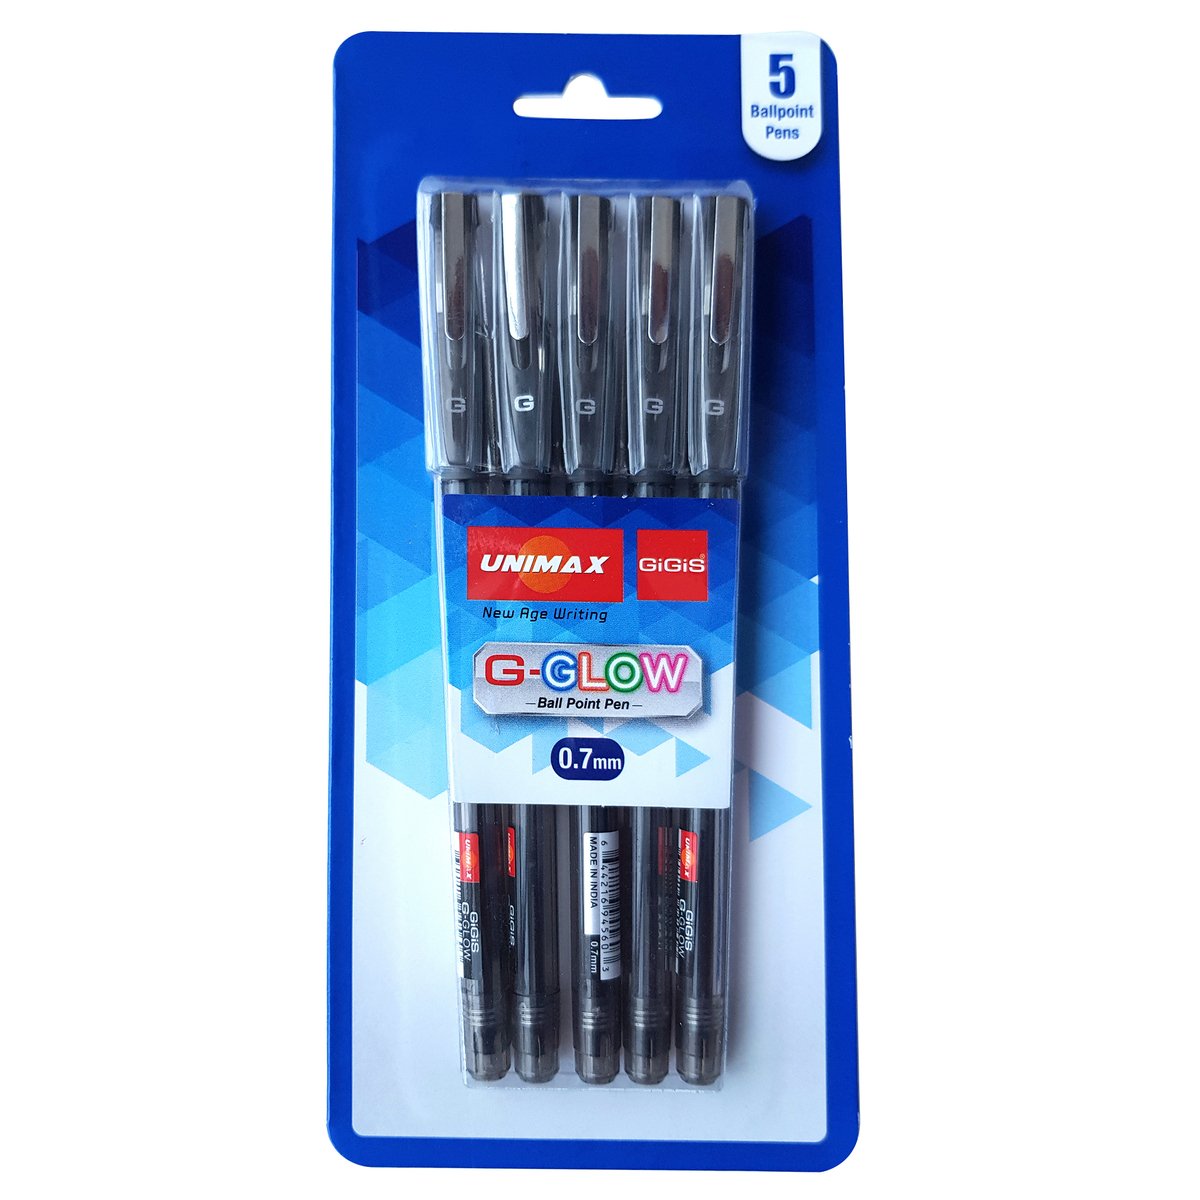 Unimax 0.7mm G-Glow Black Pen 5pcs